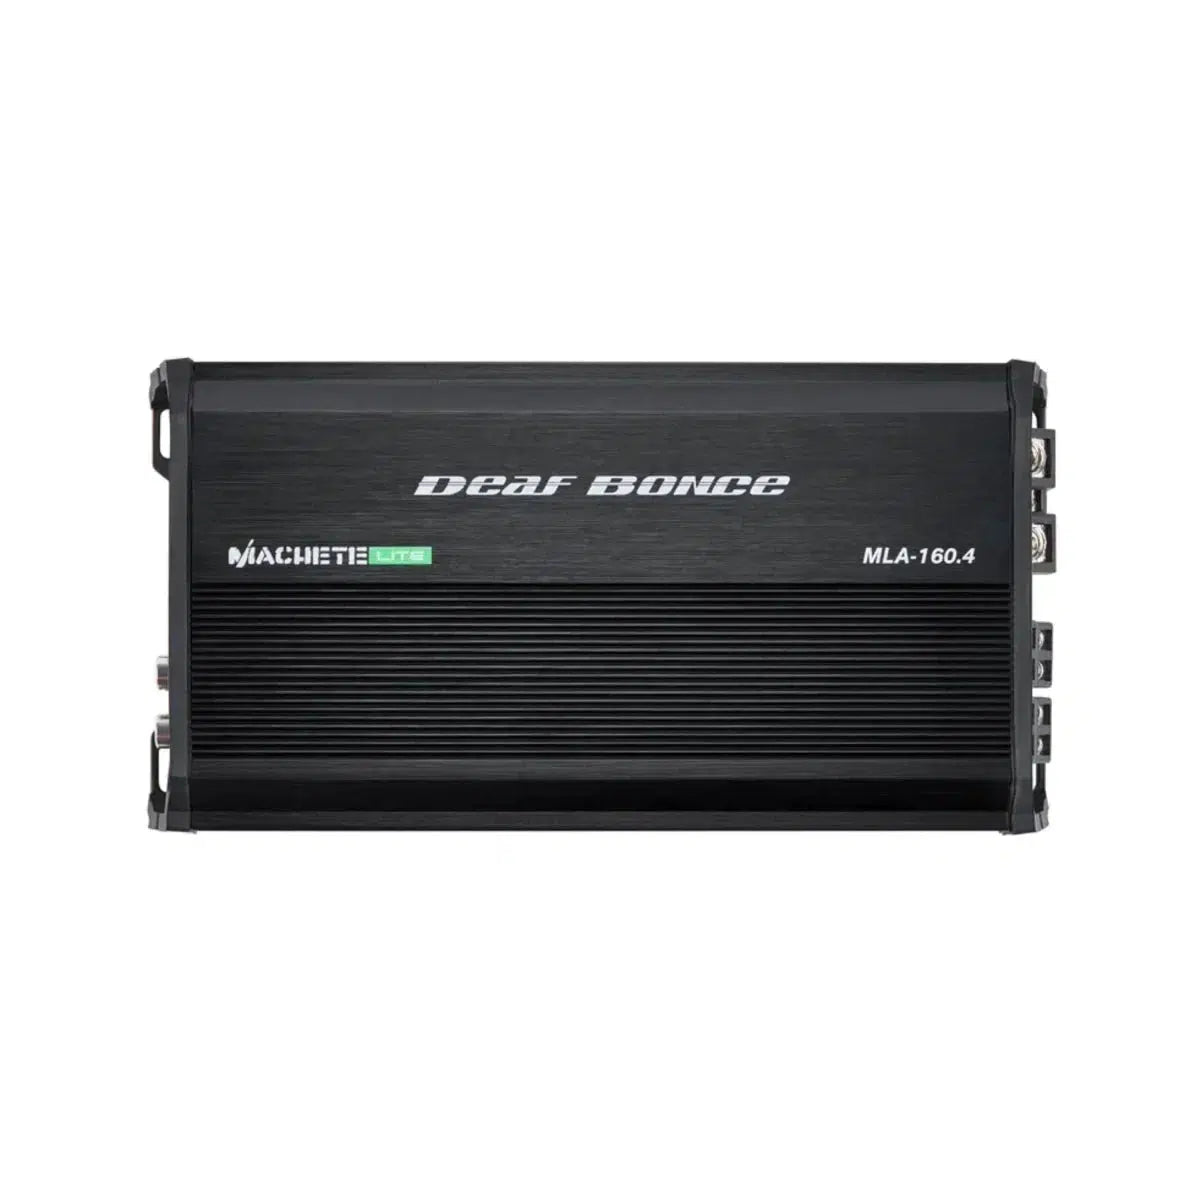 Deaf Bonce-Machete Light MLA-160.4-4-channel amplifier-Masori.de